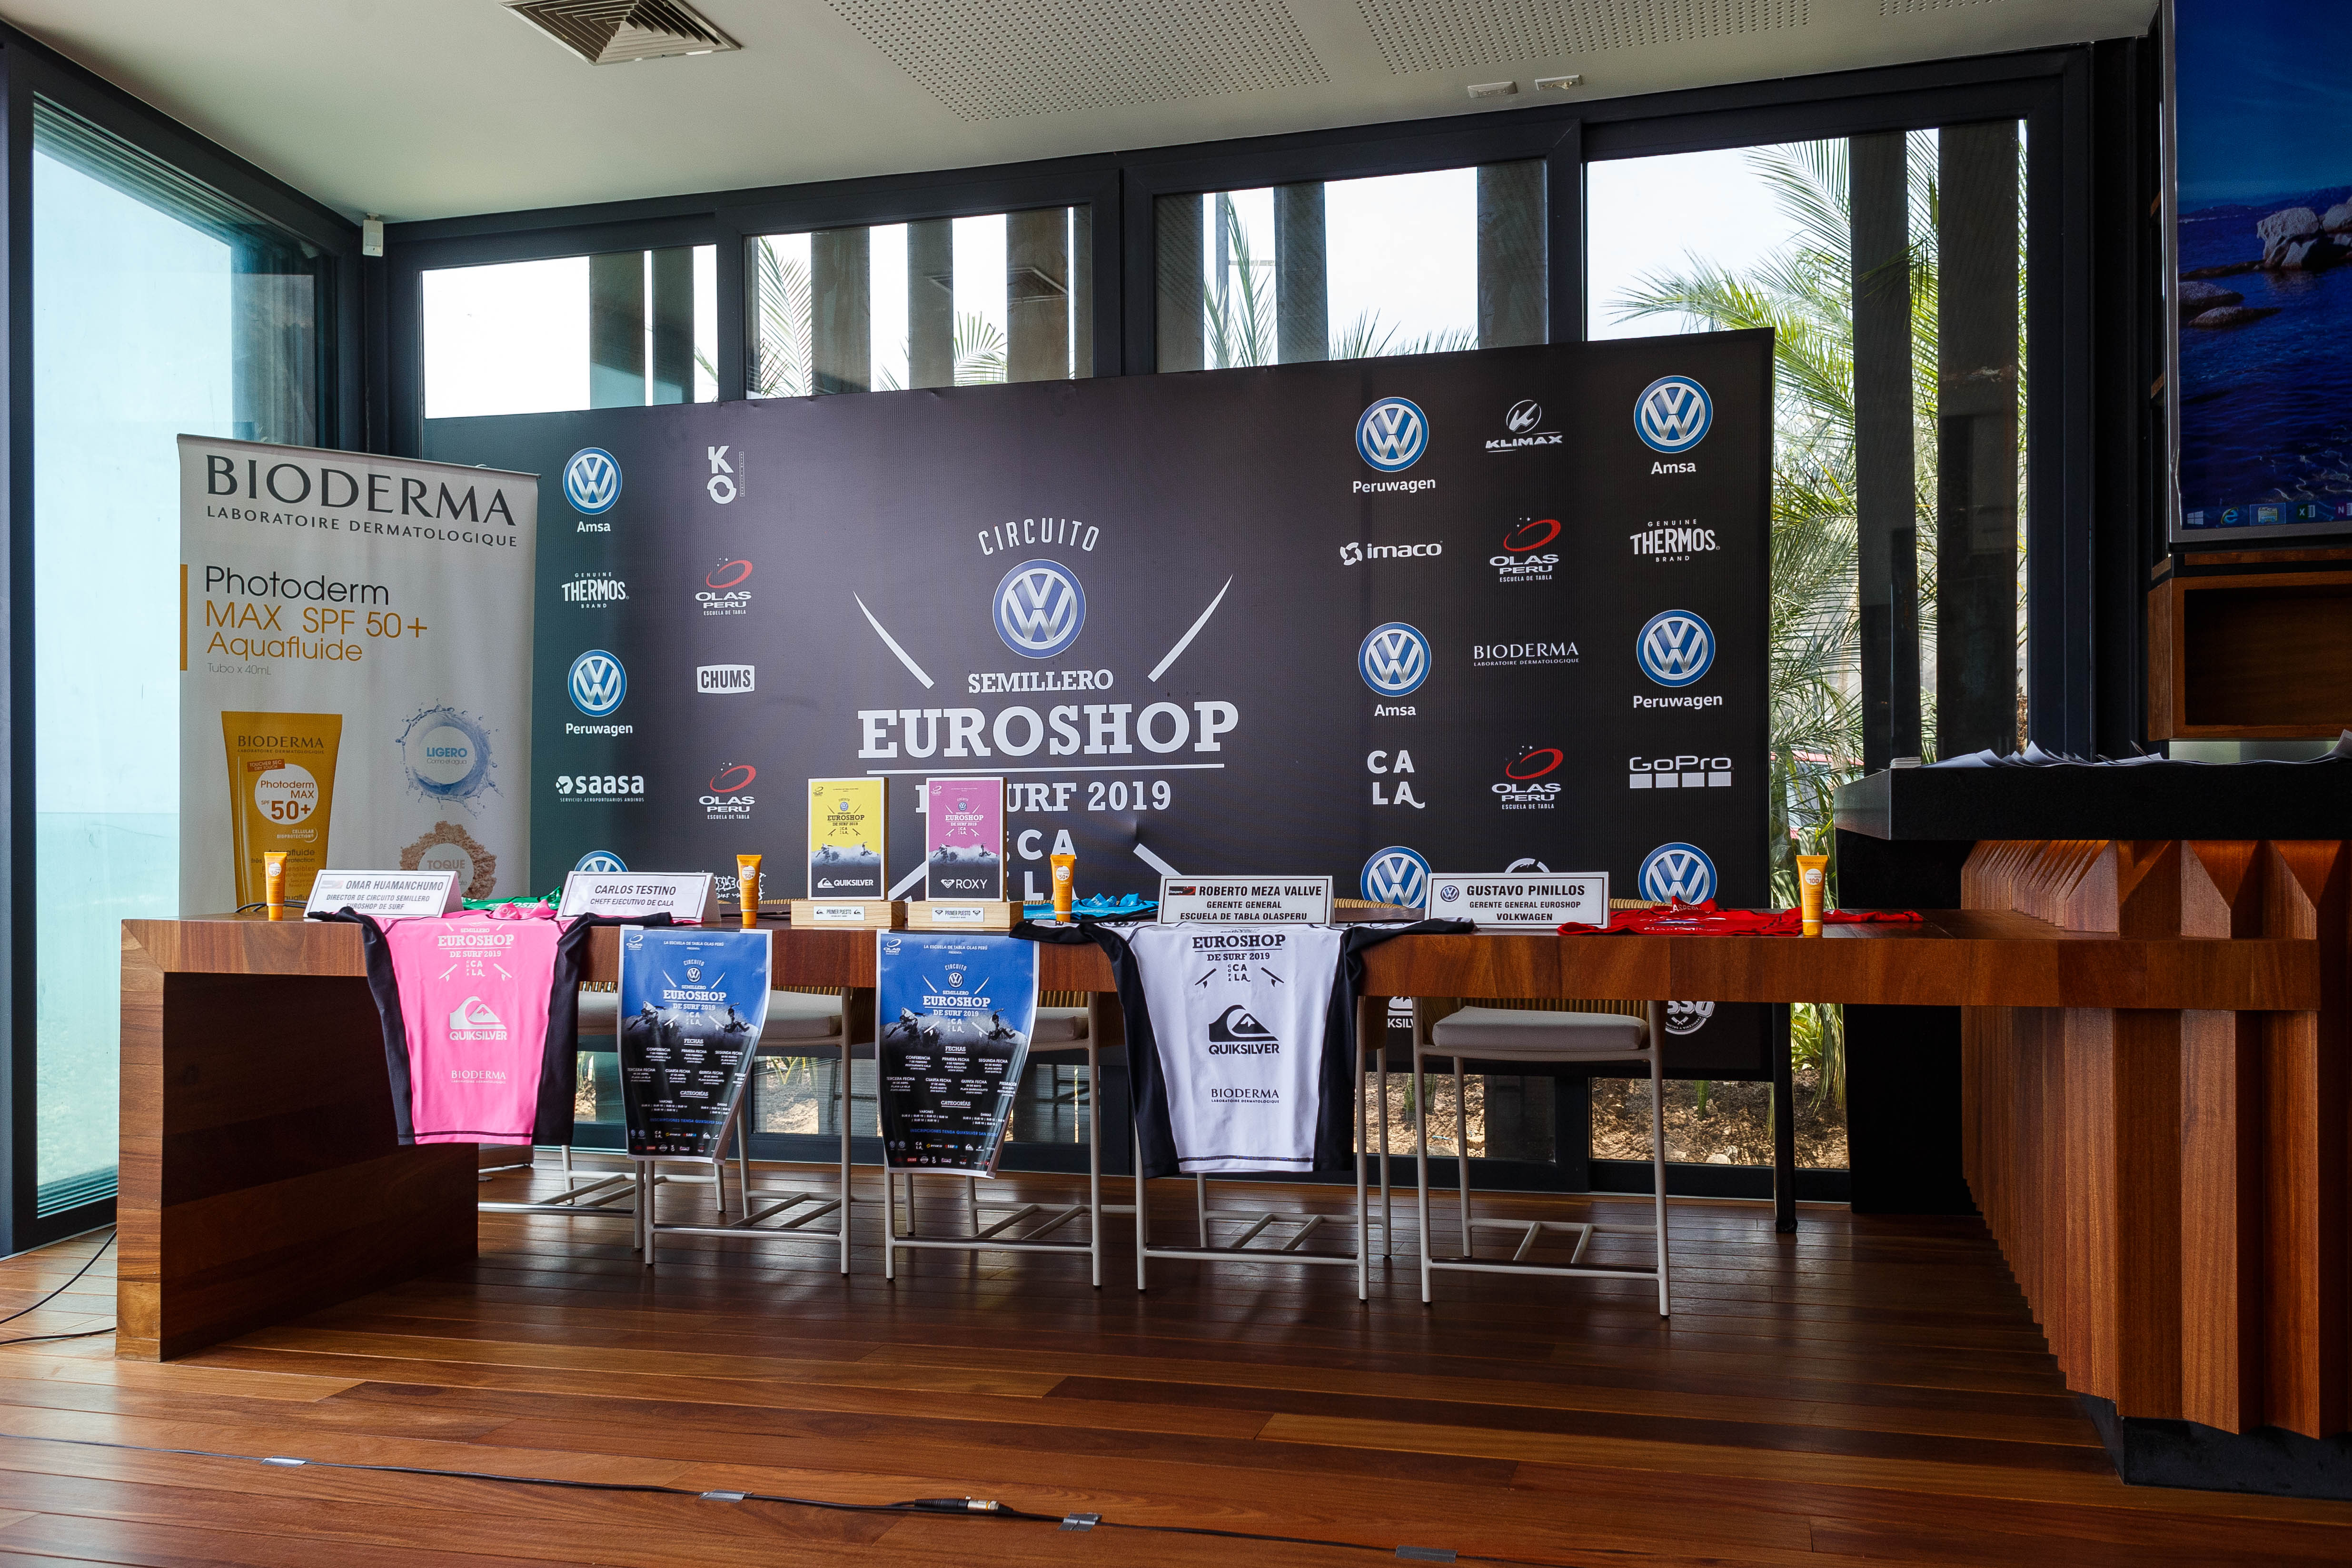 Conferencia de prensa: Circuito Semillero VW Euroshop de Surf 2019